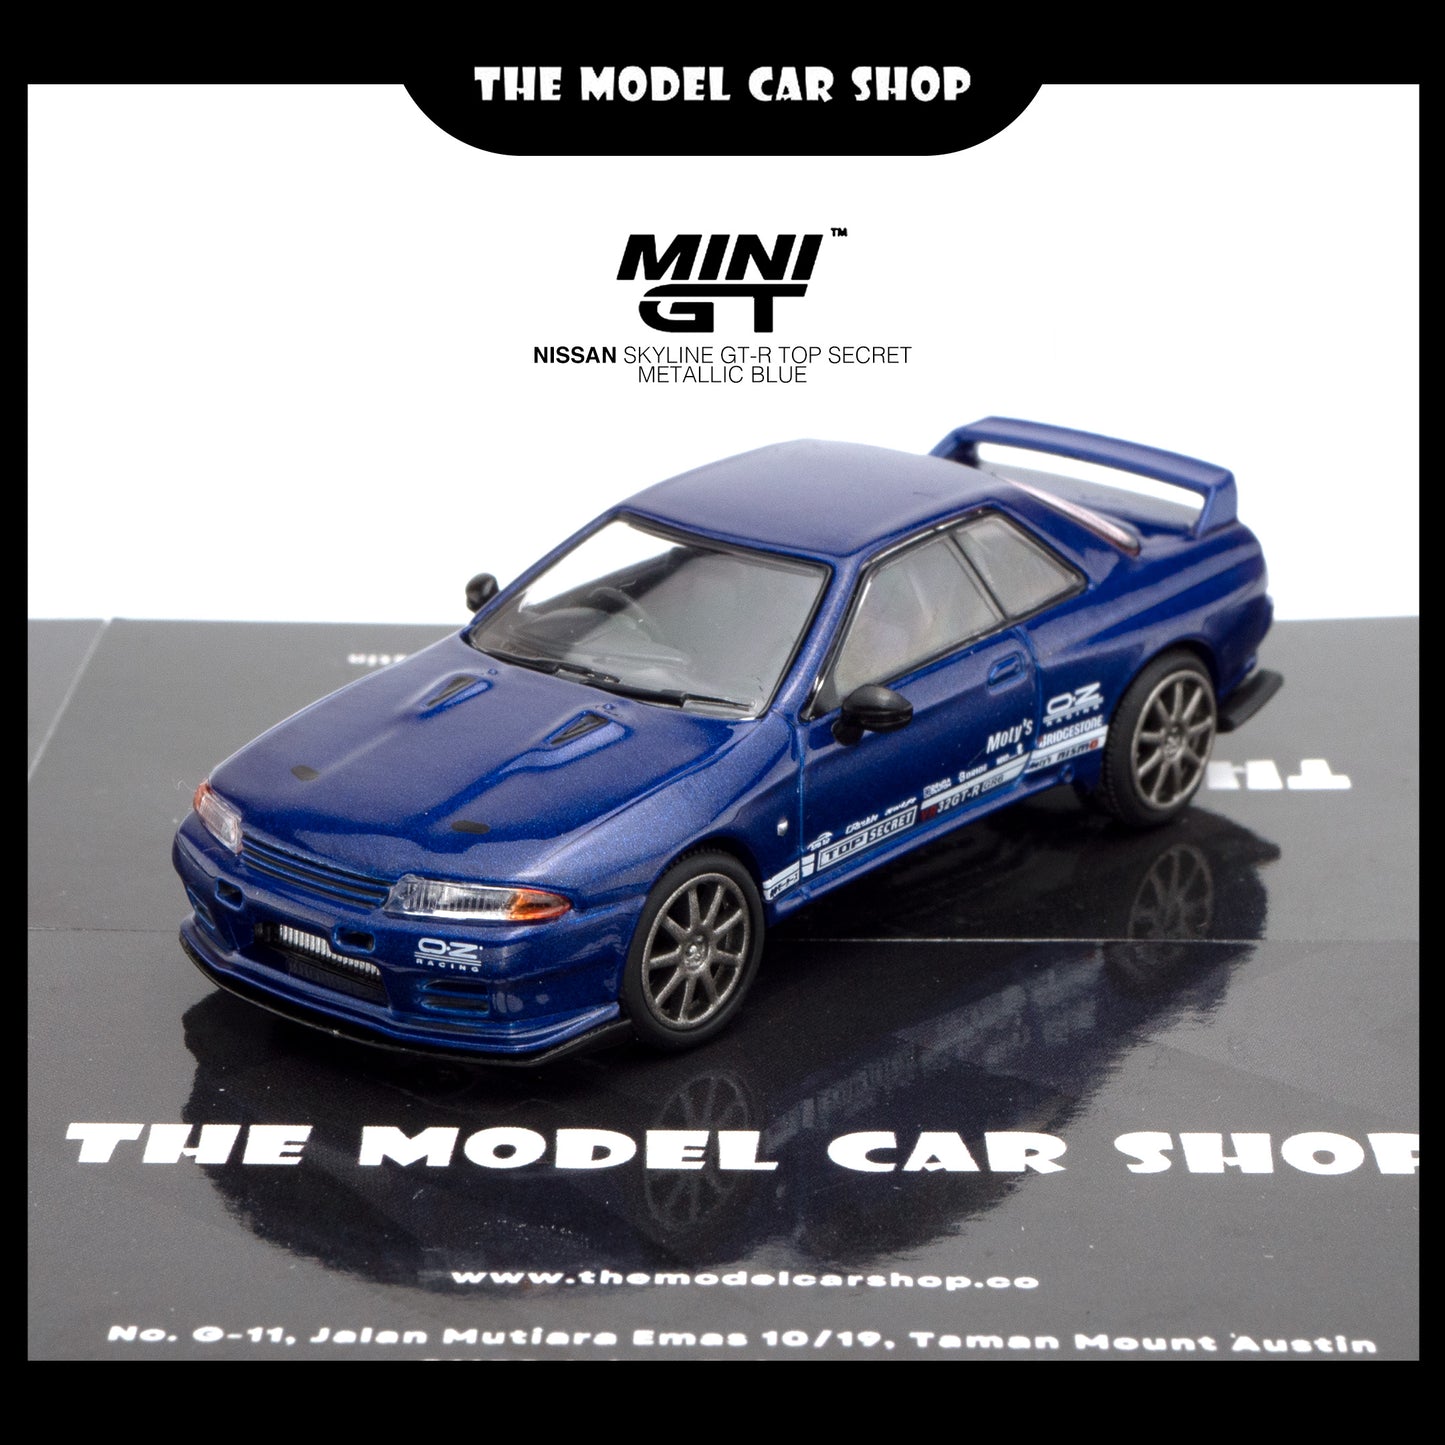 [MINI GT] Nissan Skyline GT-R Top Secret VR32 - Metallic Blue